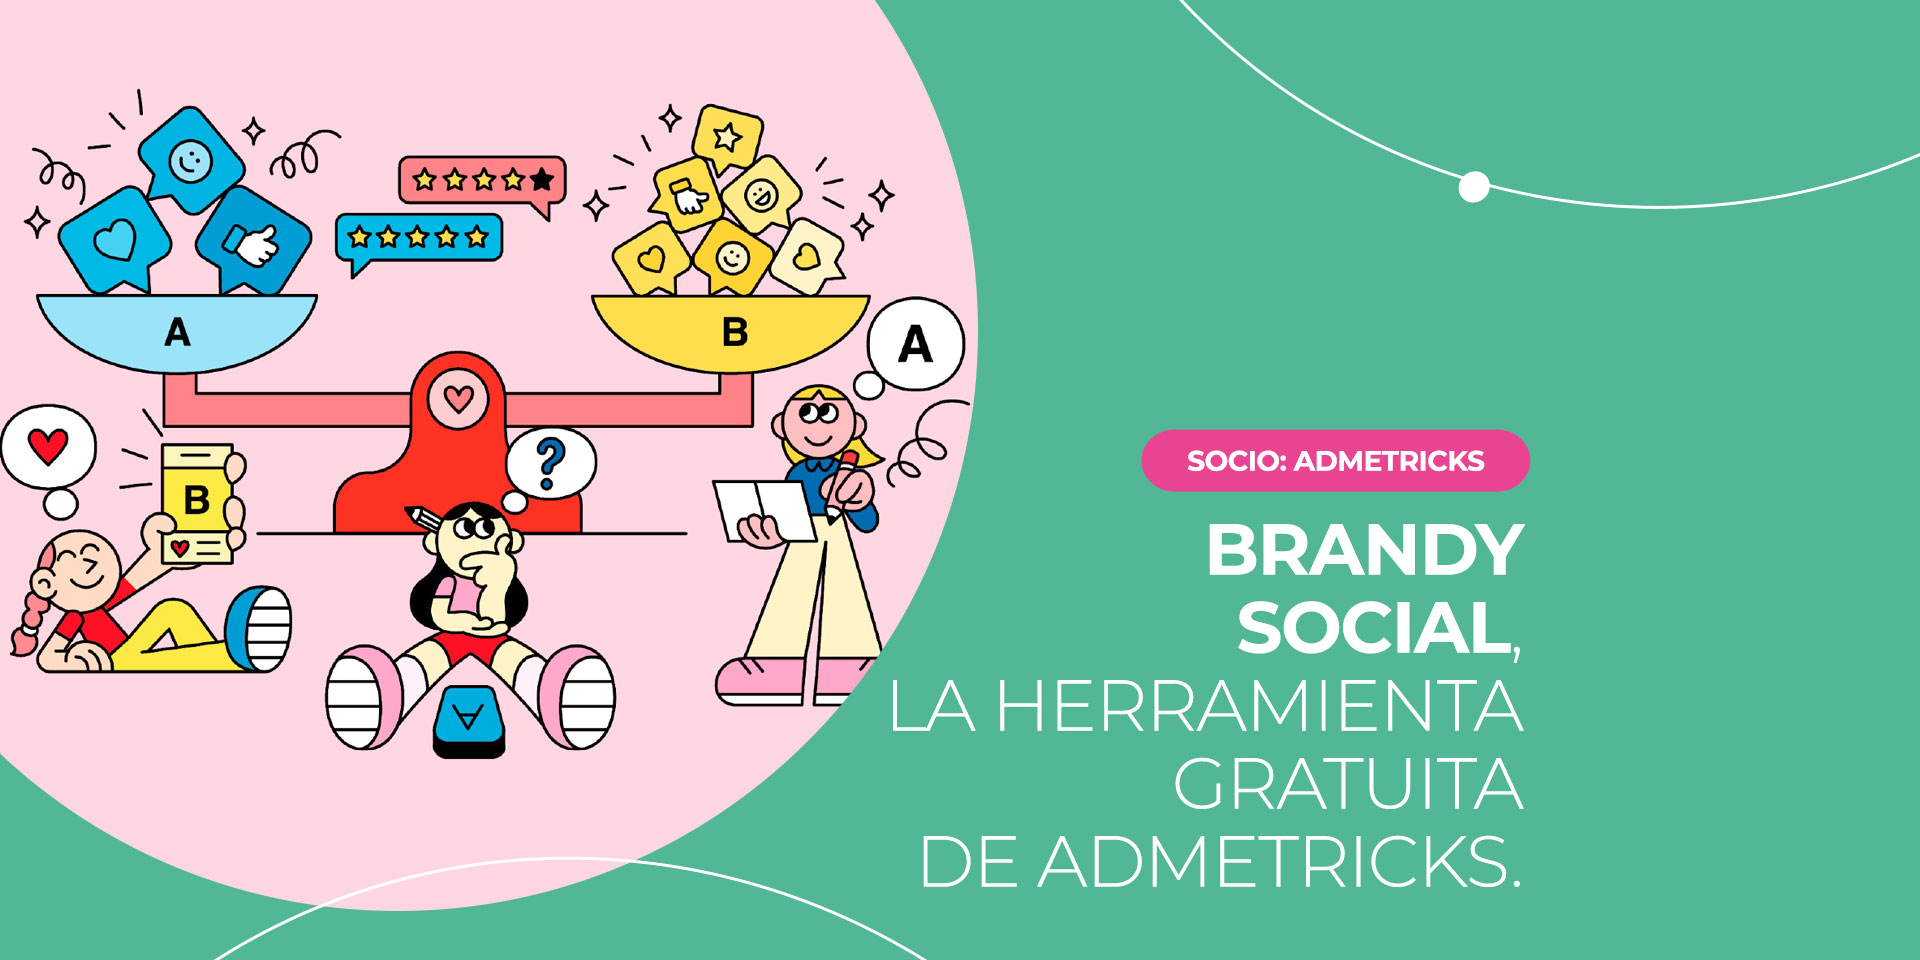 Brandy Social, la herramienta gratuita de Admetricks